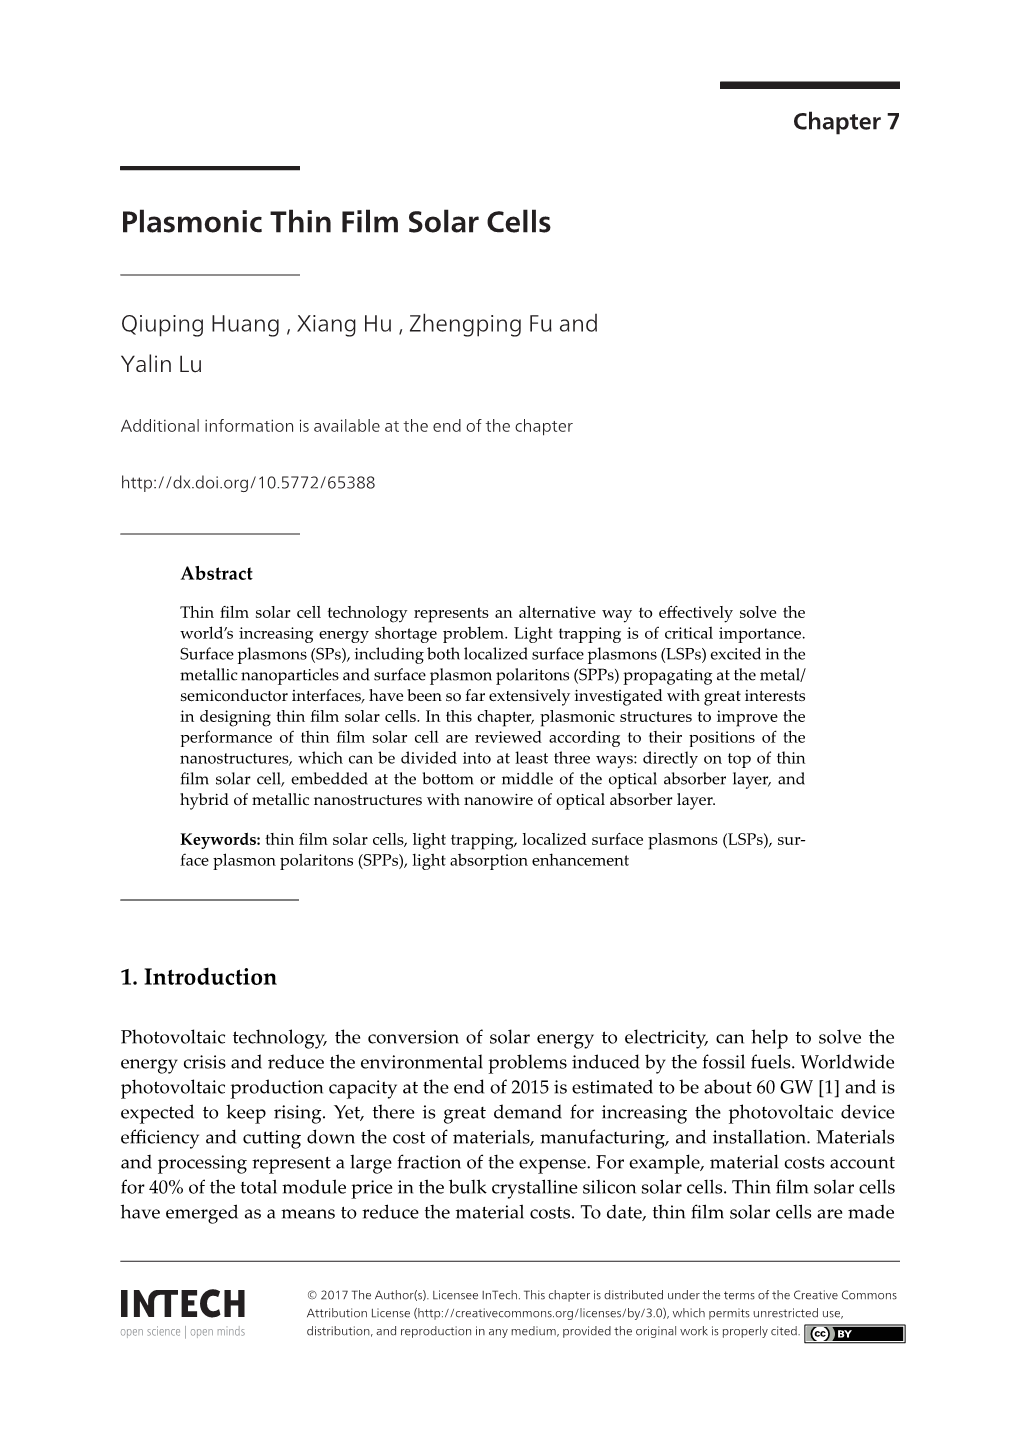 Plasmonic Thin Film Solar Cellscells